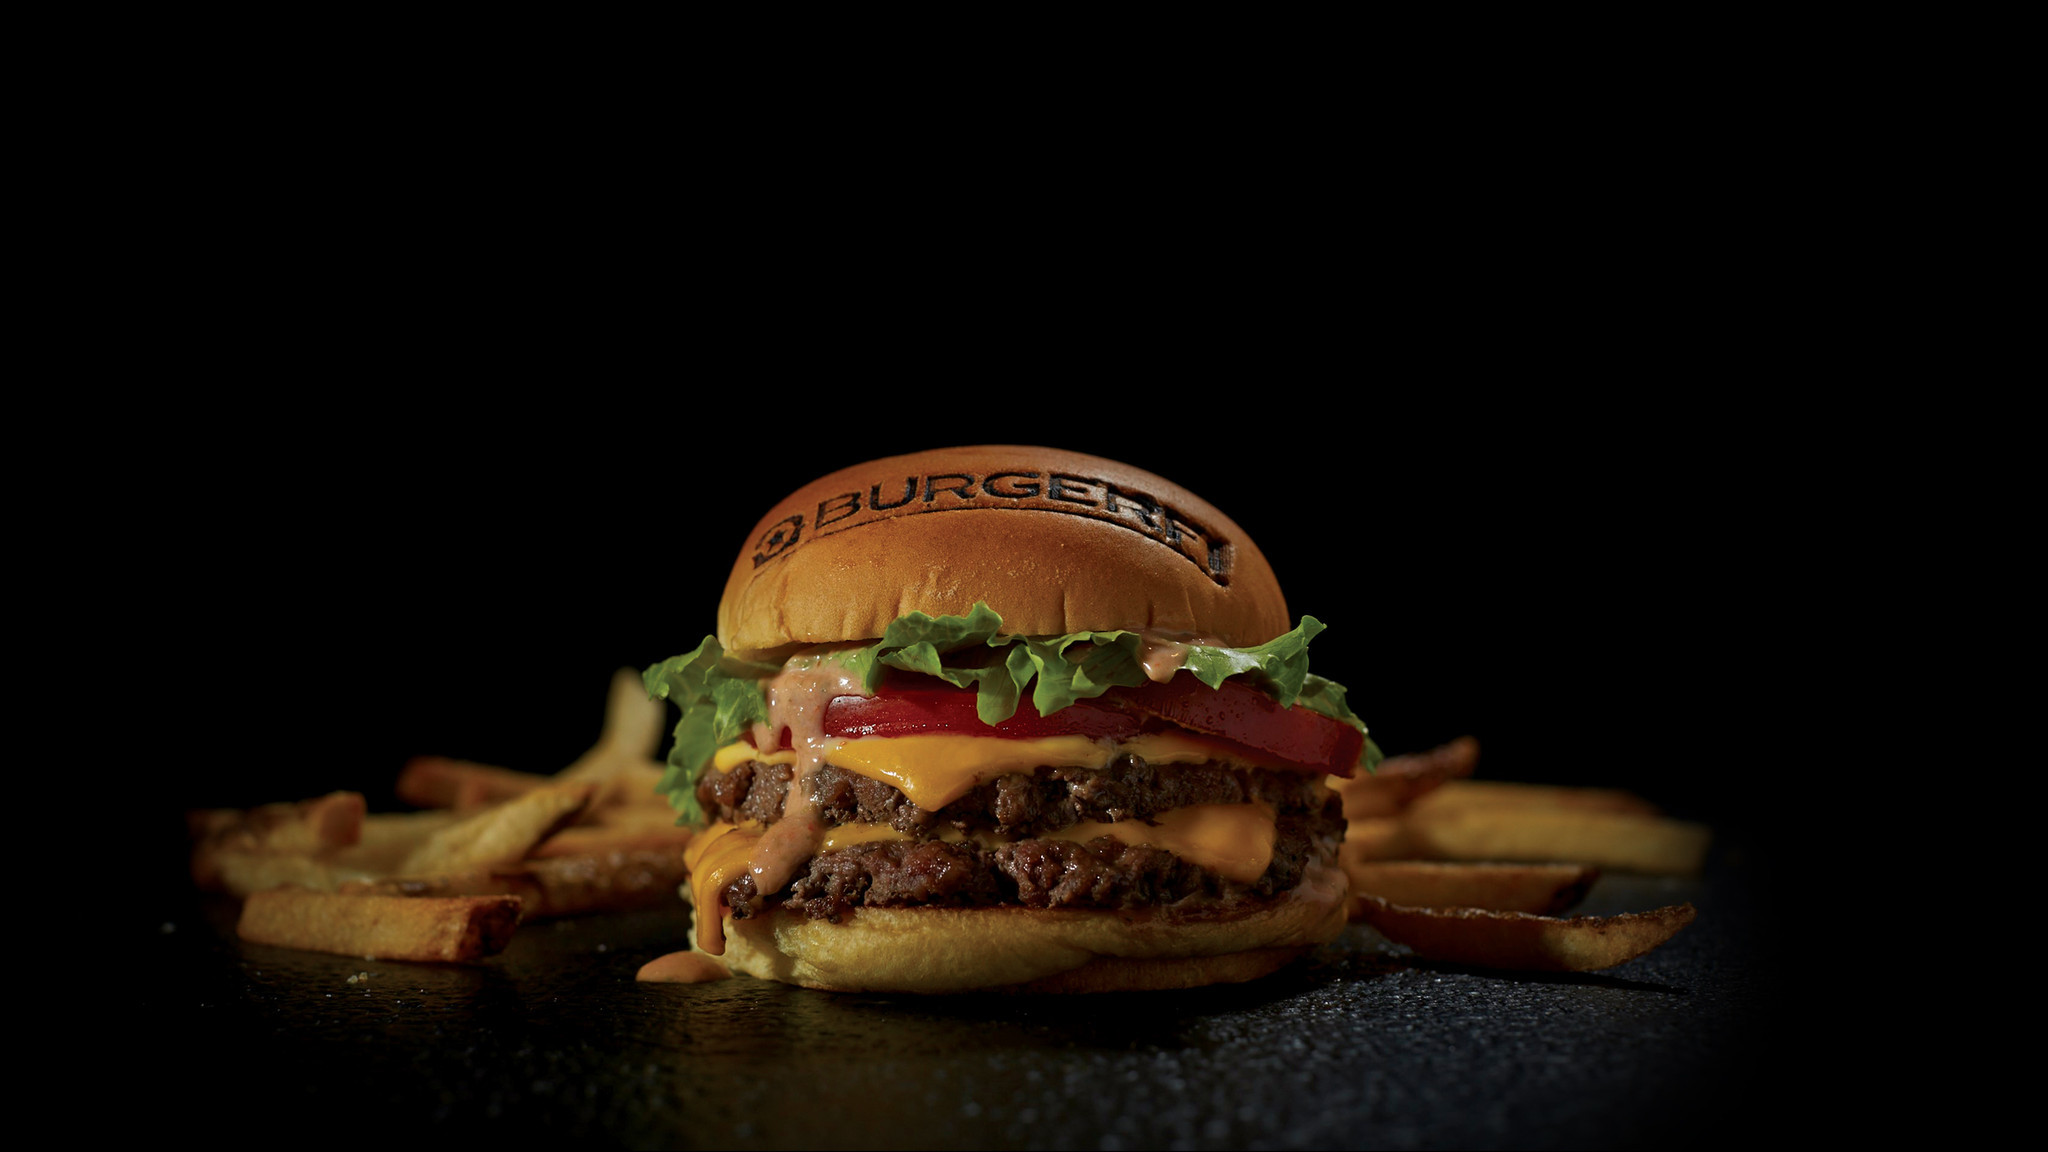 Franchising Focus: BurgerFi CEO talks growth, labor, technology